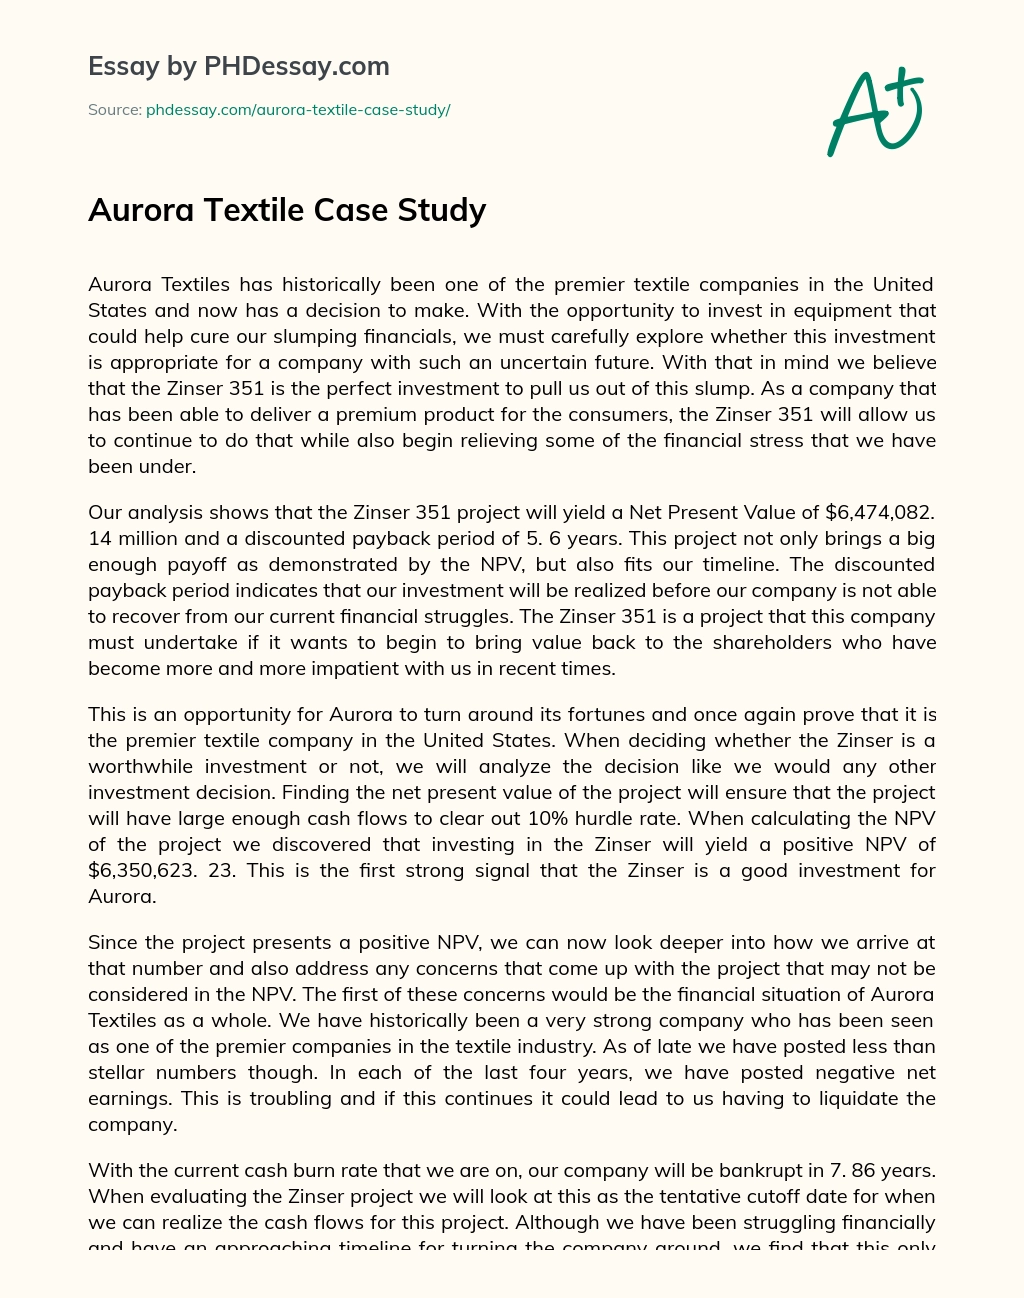 Aurora Textile Case Study essay